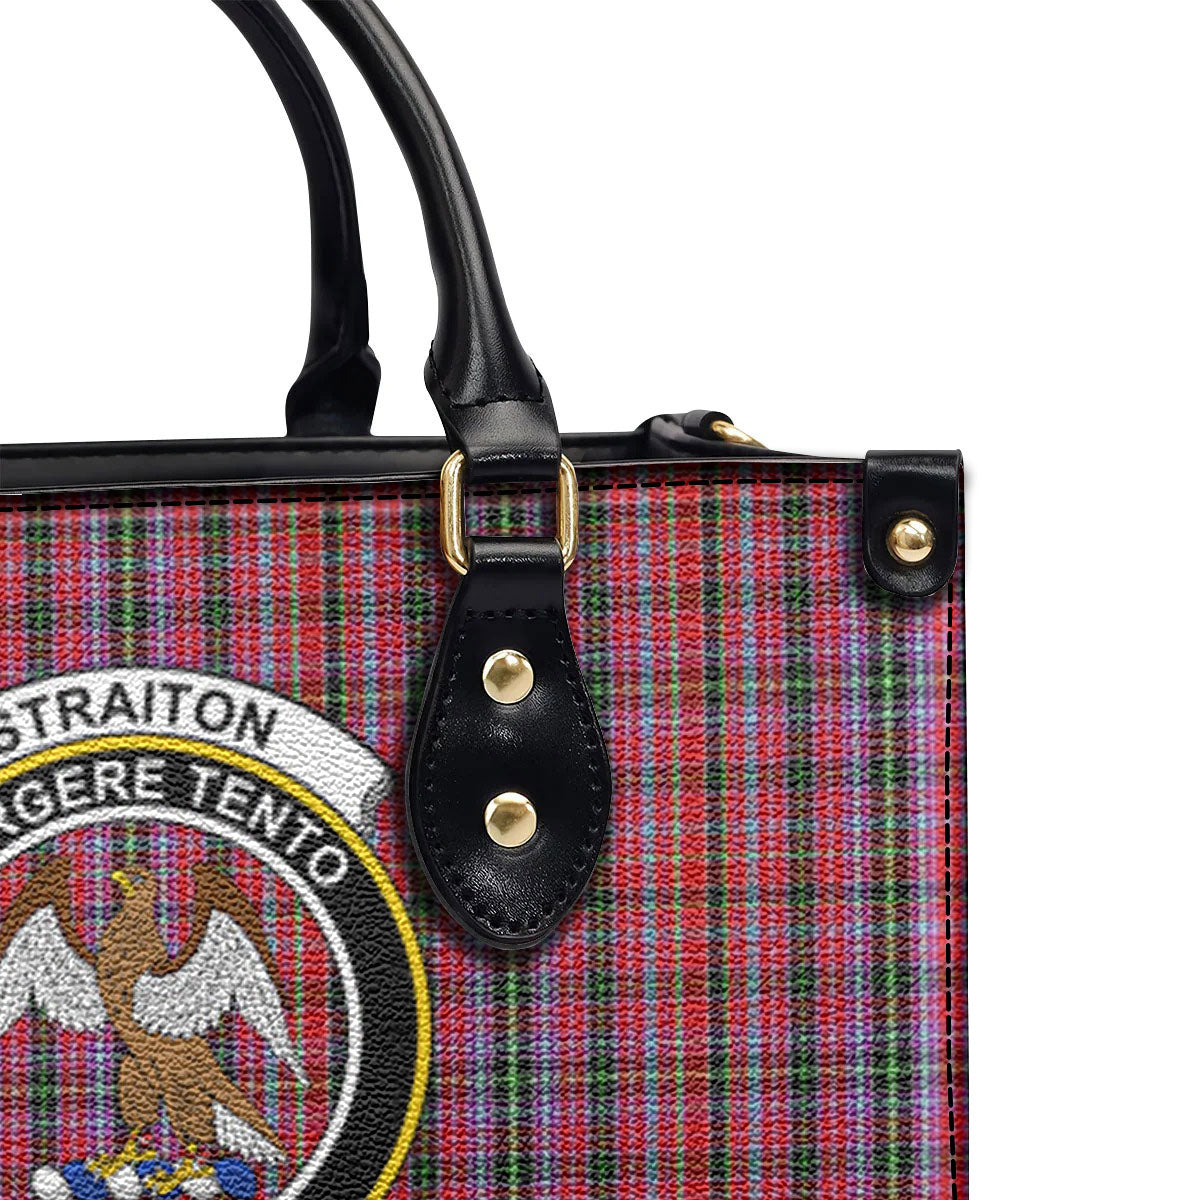 Straiton Tartan Crest Leather Handbag